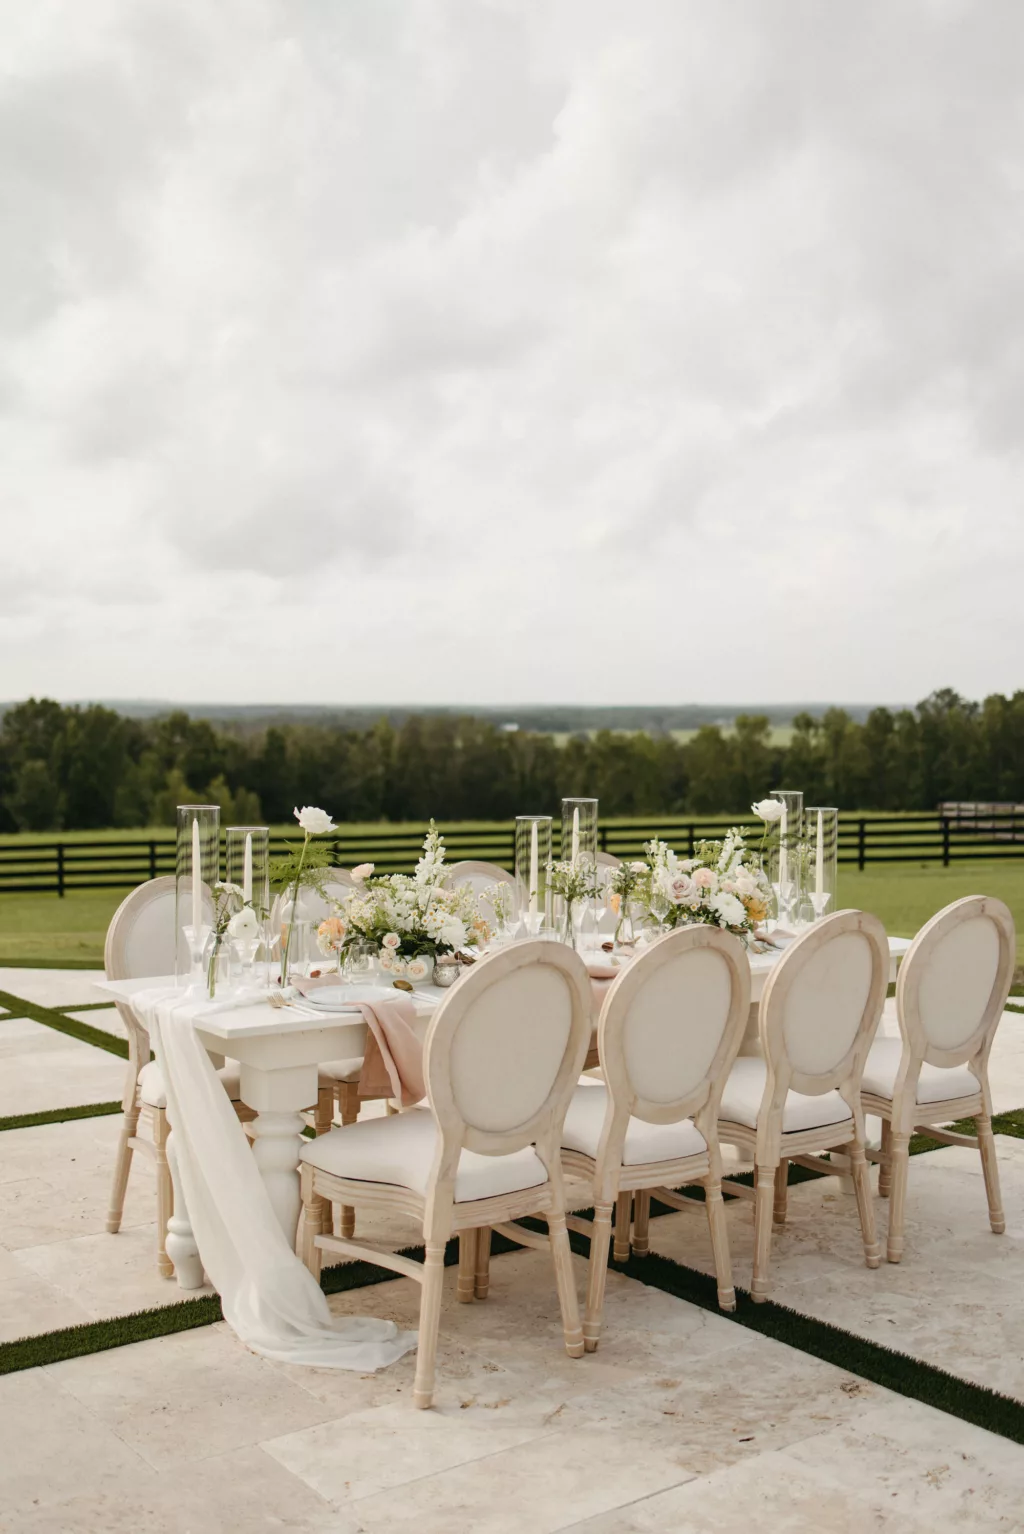 White Spring European Inspired Outdoor Wedding Reception Table Decor Inspiration | Tampa Bay Event Venue La Hacienda at Snow Hill